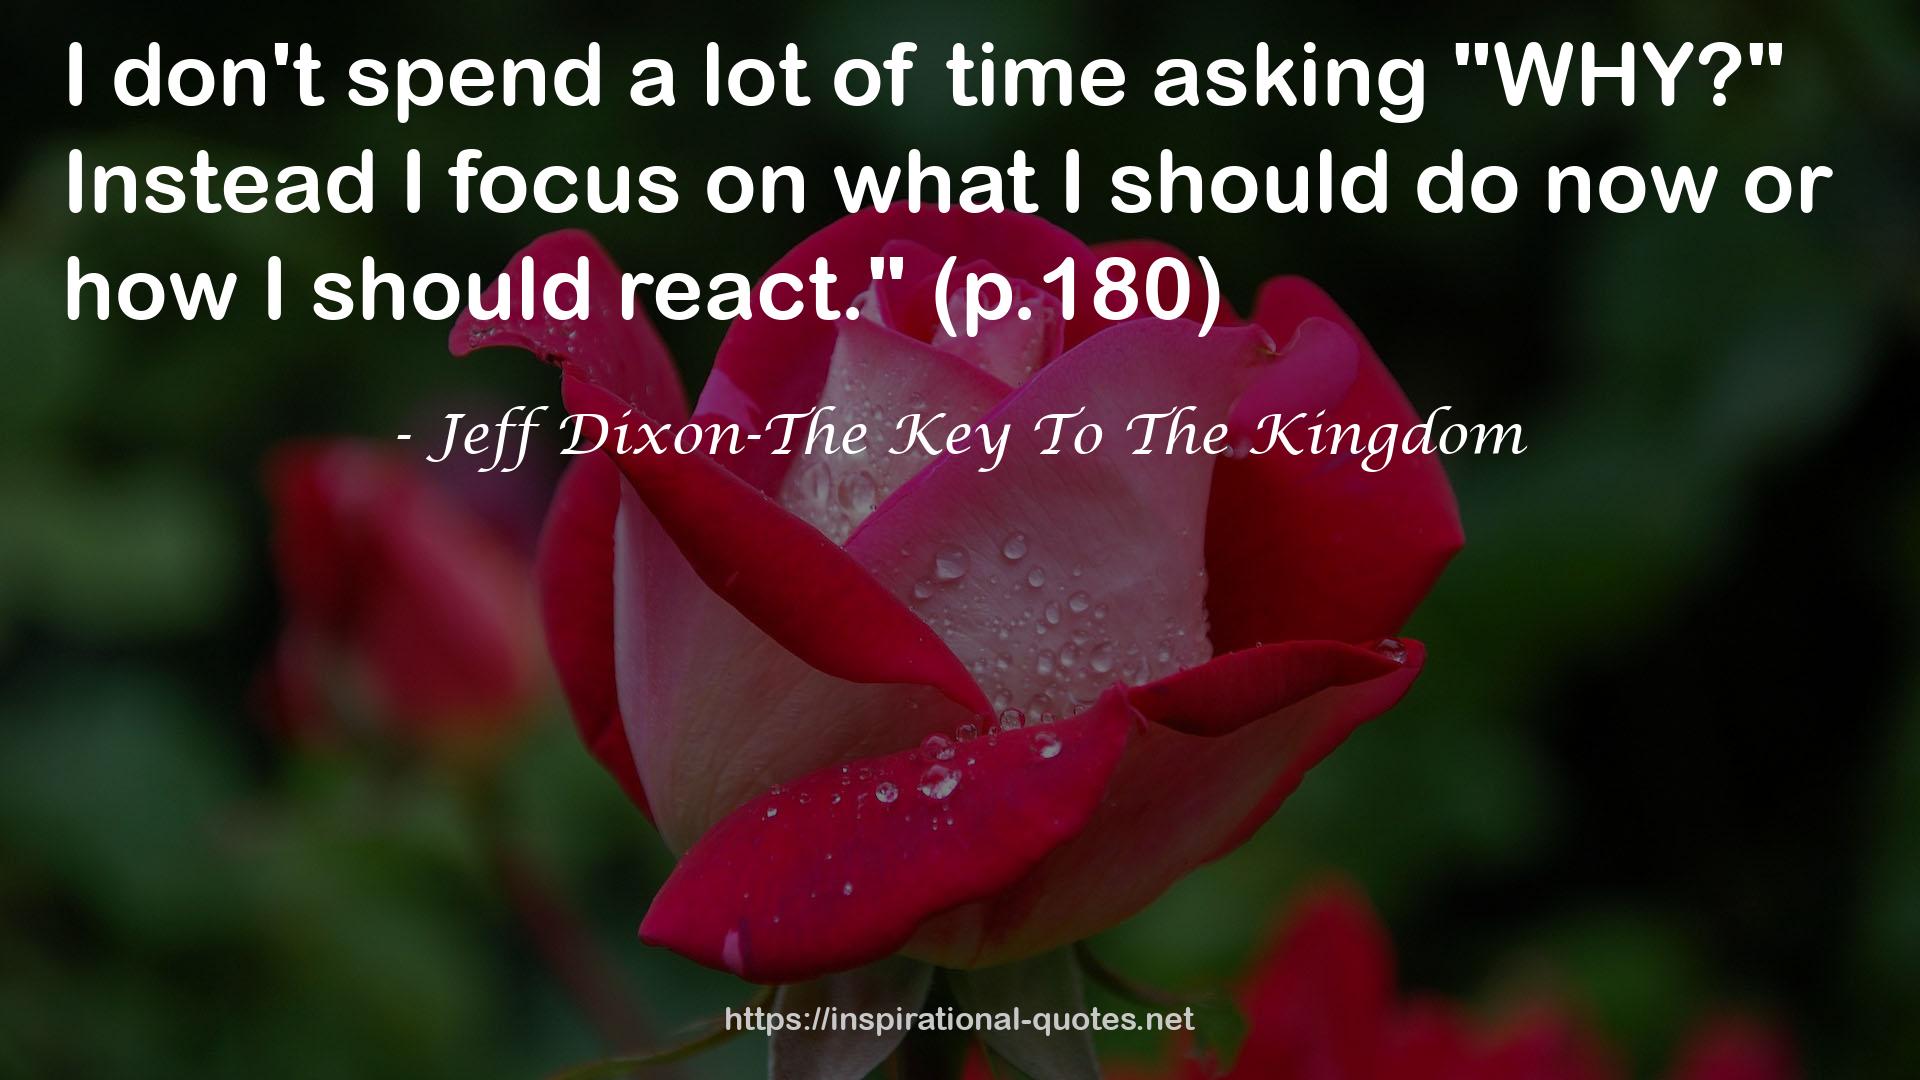 Jeff Dixon-The Key To The Kingdom QUOTES